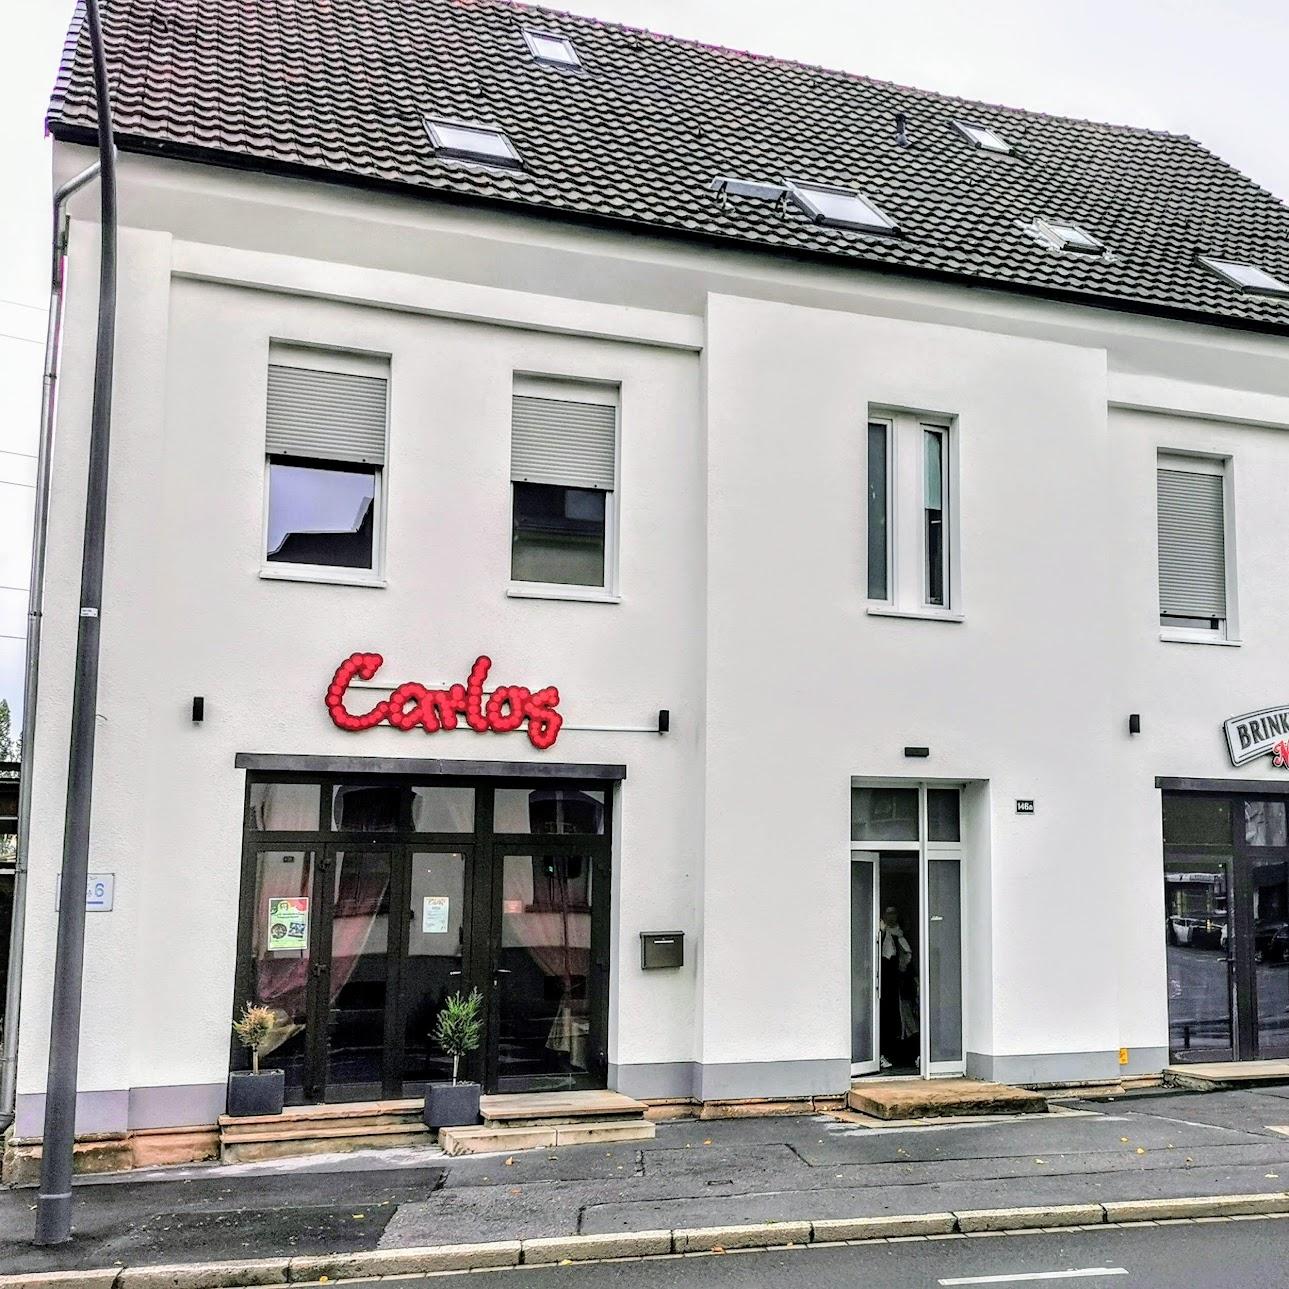 Restaurant "Carlos Restaurant" in Dortmund